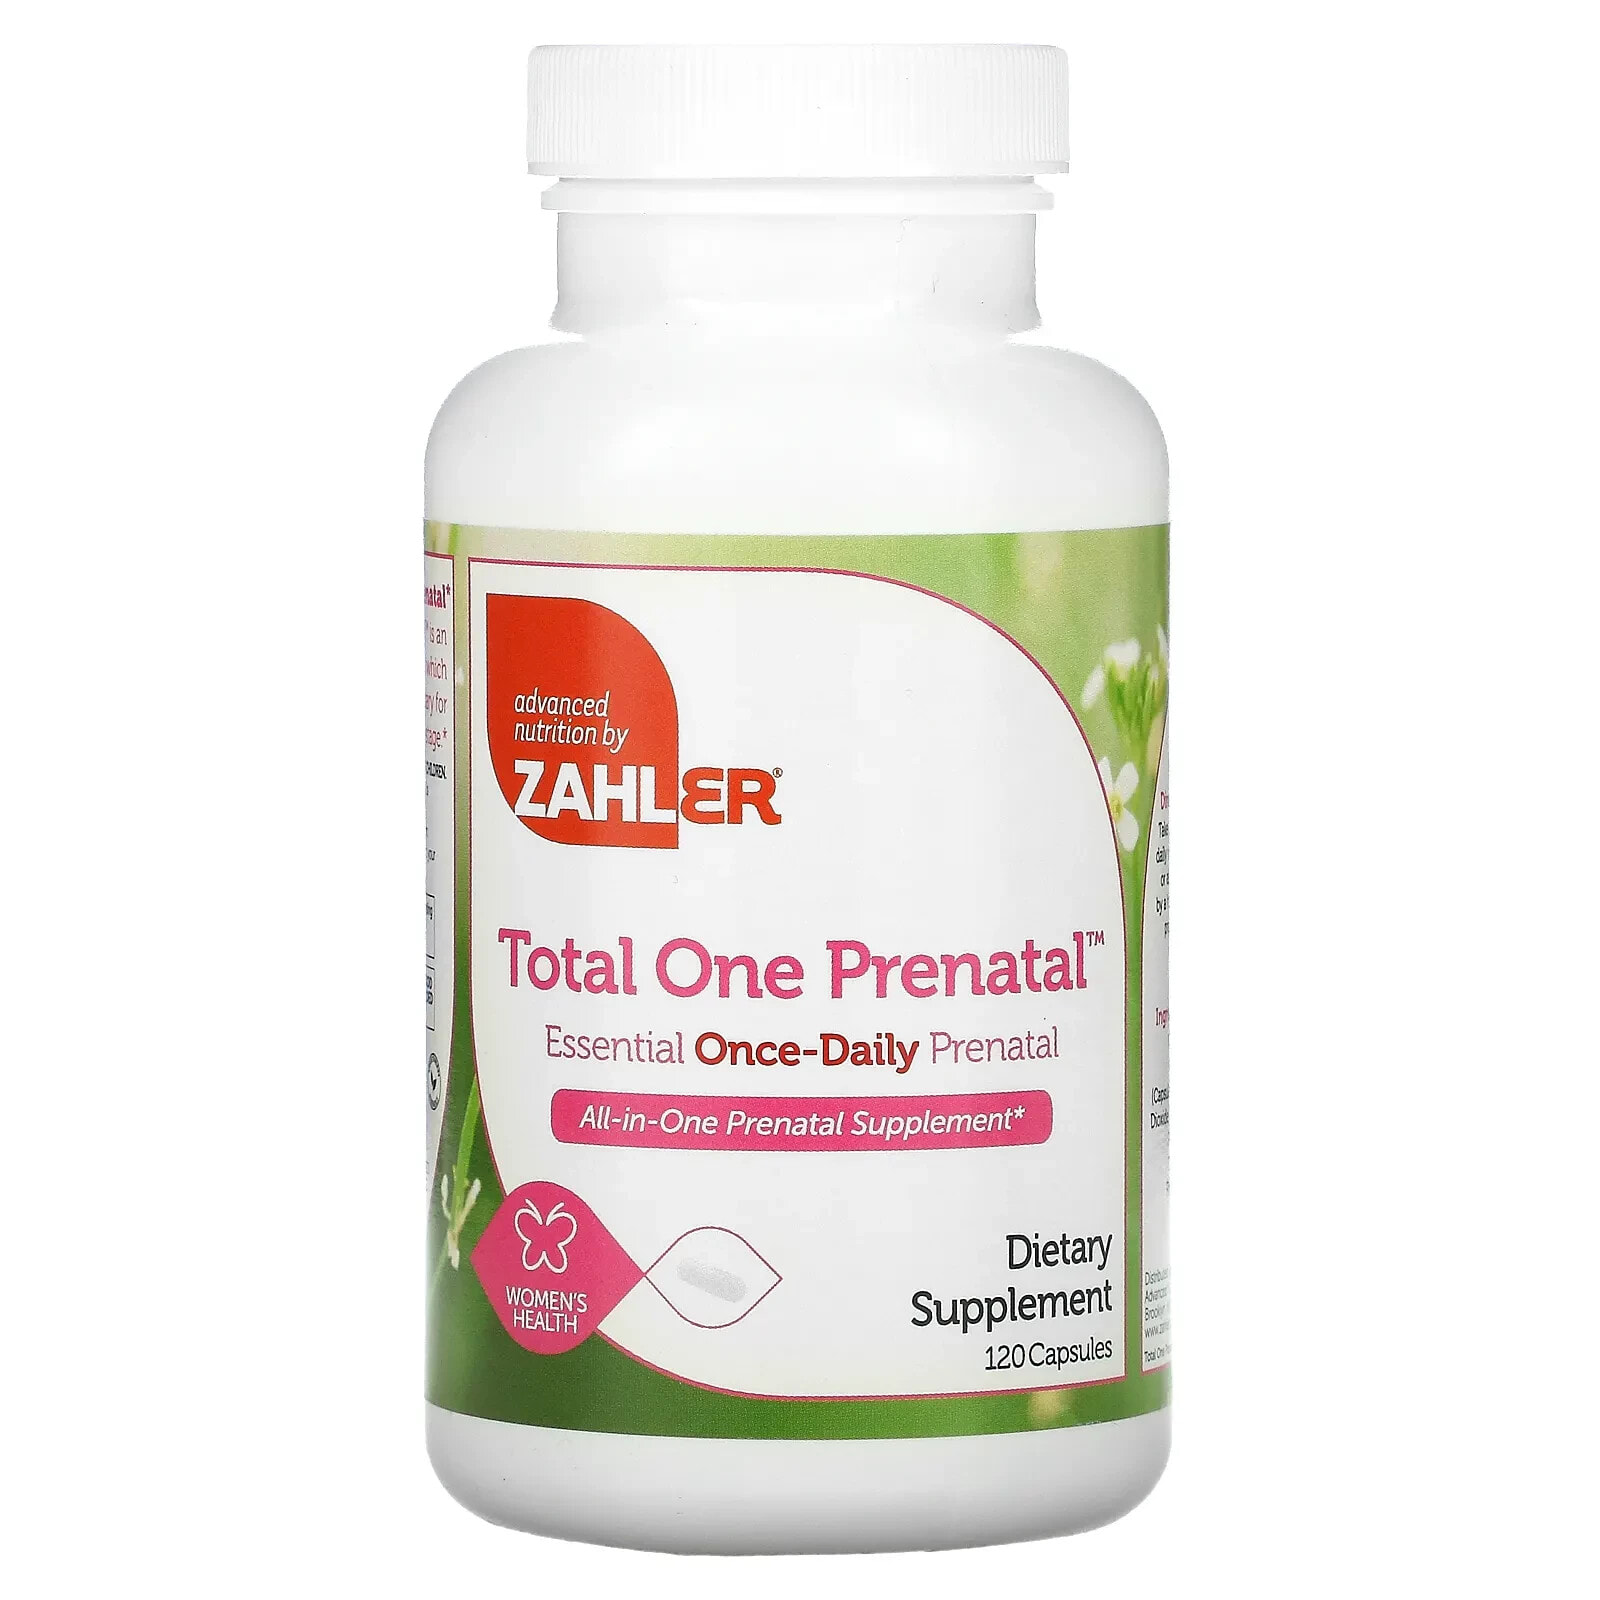 Total One Prenatal, Essential Once-Daily Prenatal, 60 Capsules